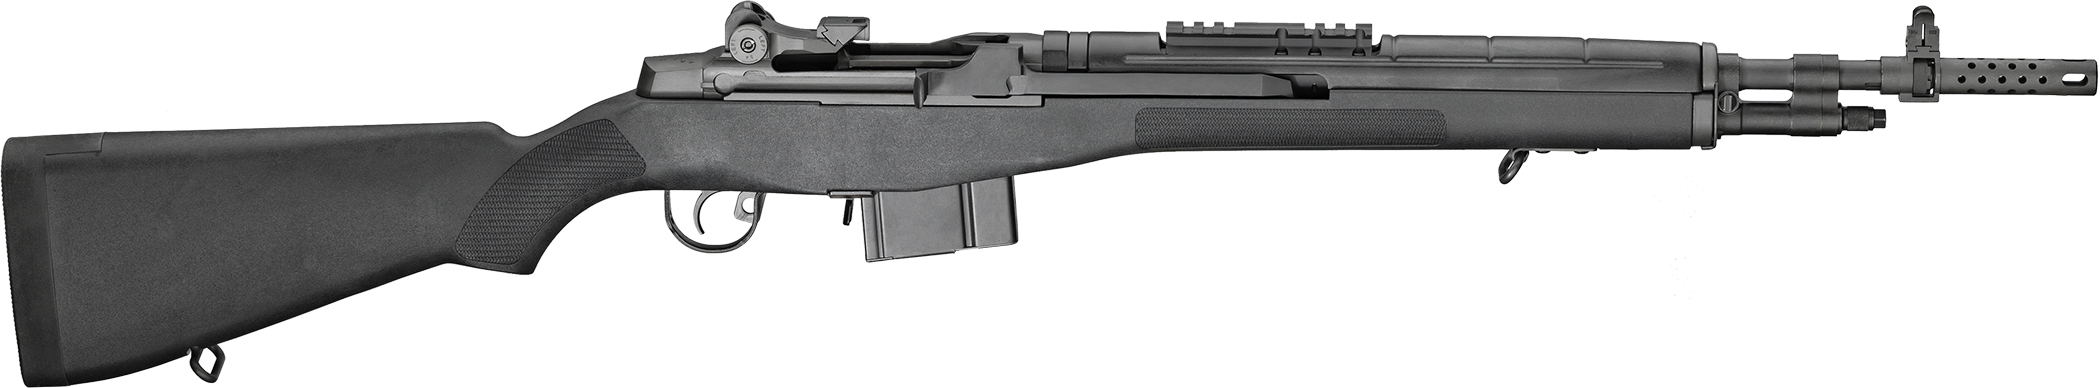 Best Featureless AR-15 Parts & Builds – Firearm Review